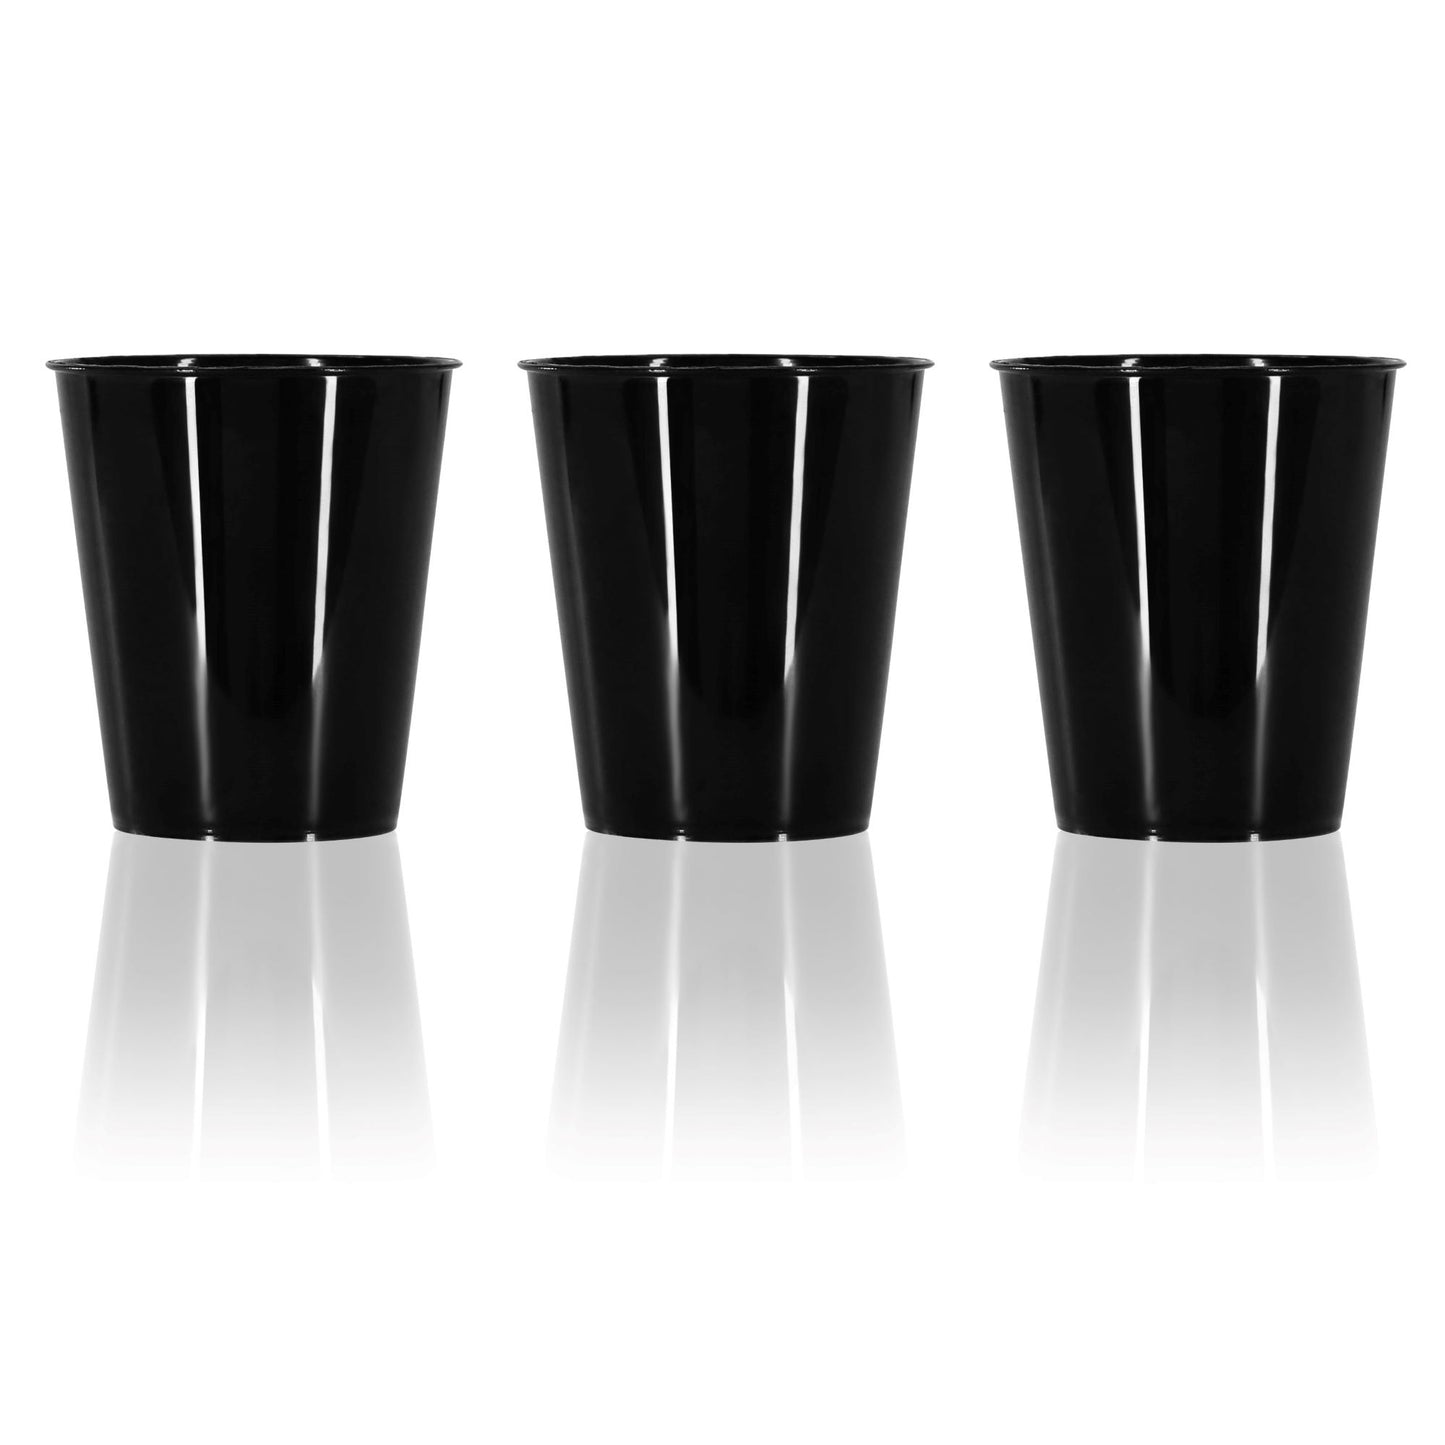 Pack of 50 x Black Shot Glasses Biodegradable Material Plastic 5cl 50ml Stackable Liquor, Spirits, Food Sampling, Parties, Jelly Shots